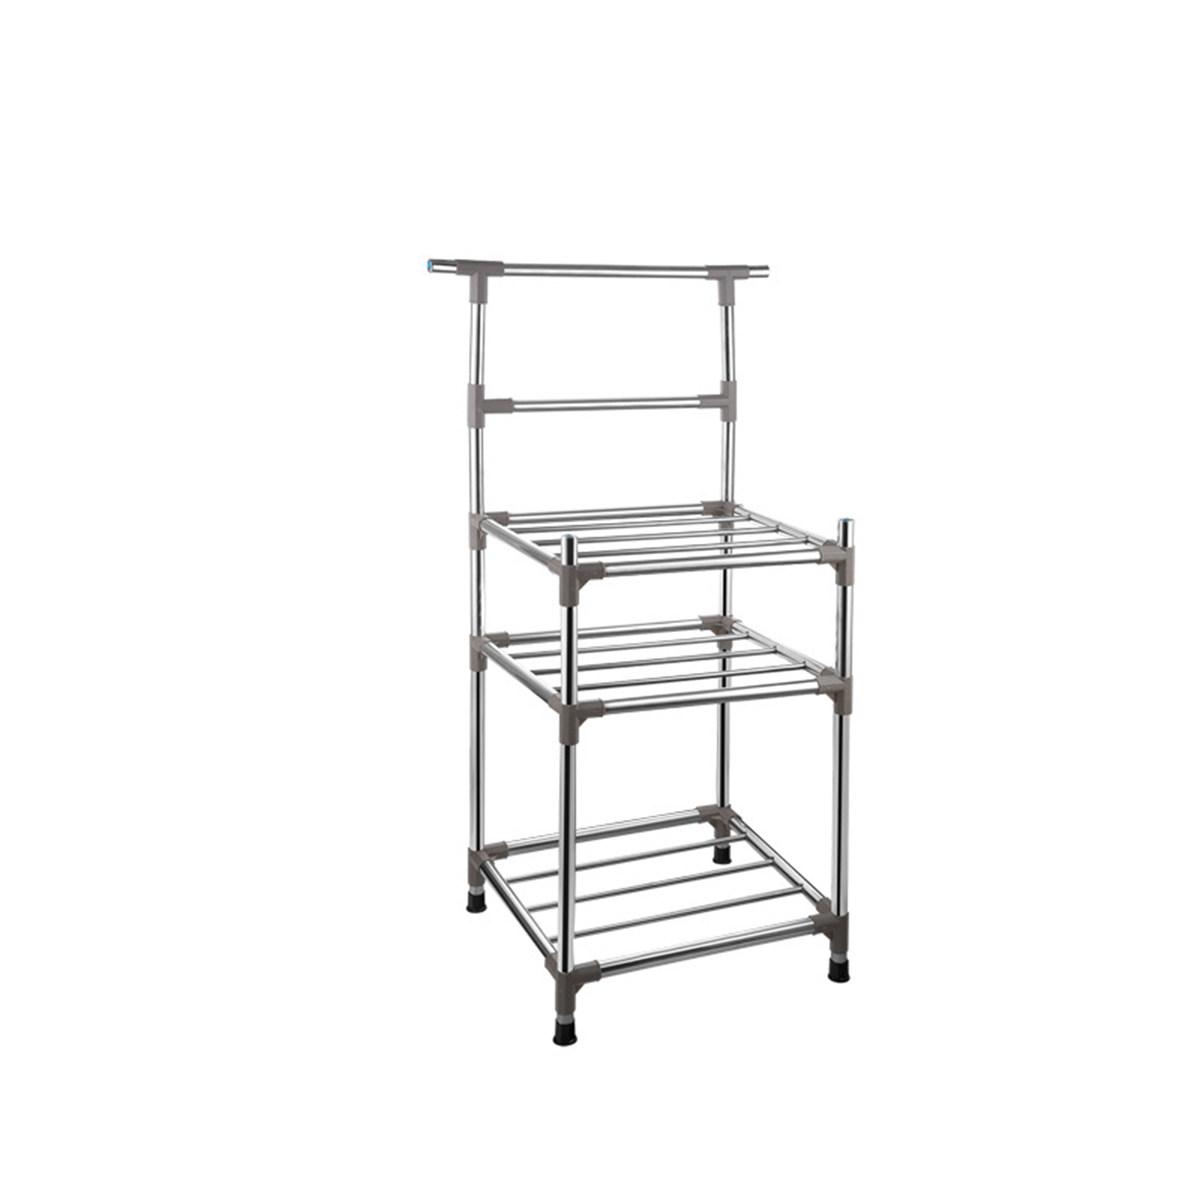 34-Layers-Free-standing-Stainless-Steel-Kitchen-Rack-Sheelf-Pot-Storage-Holder-1605396-4